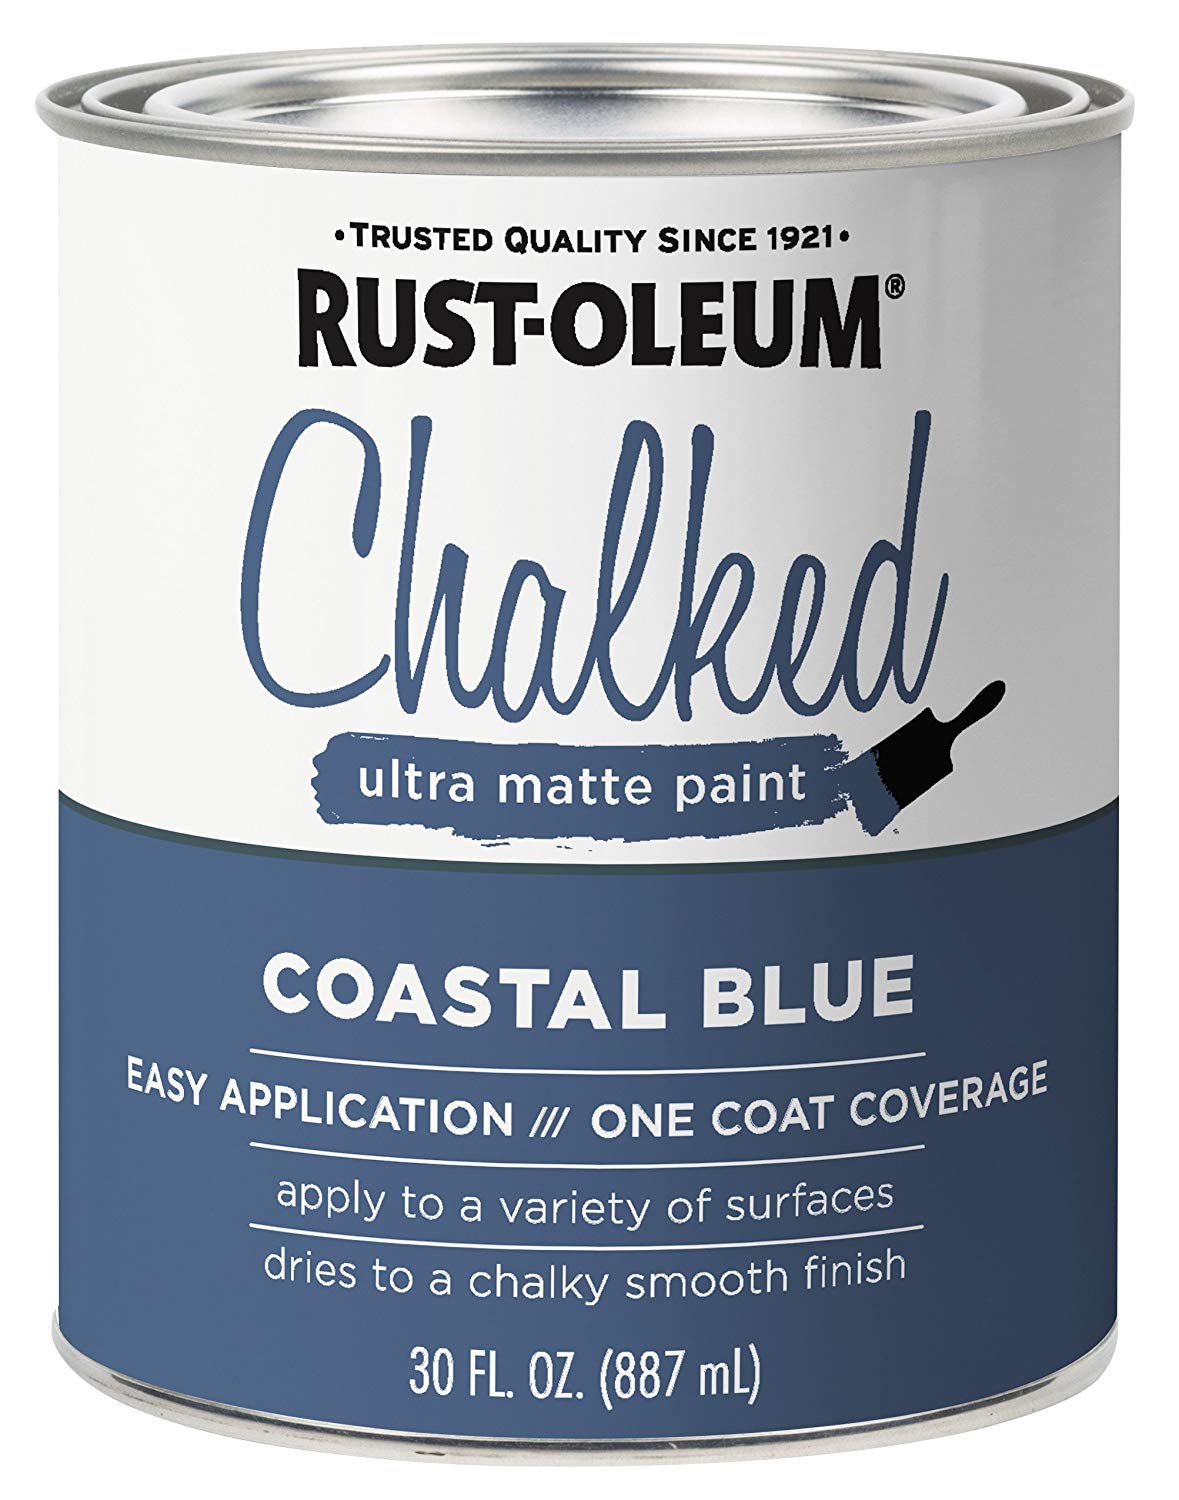 Rust-Oleum 329207 Chalked Ultra Matte Paint, Coastal Blue, 30 Oz